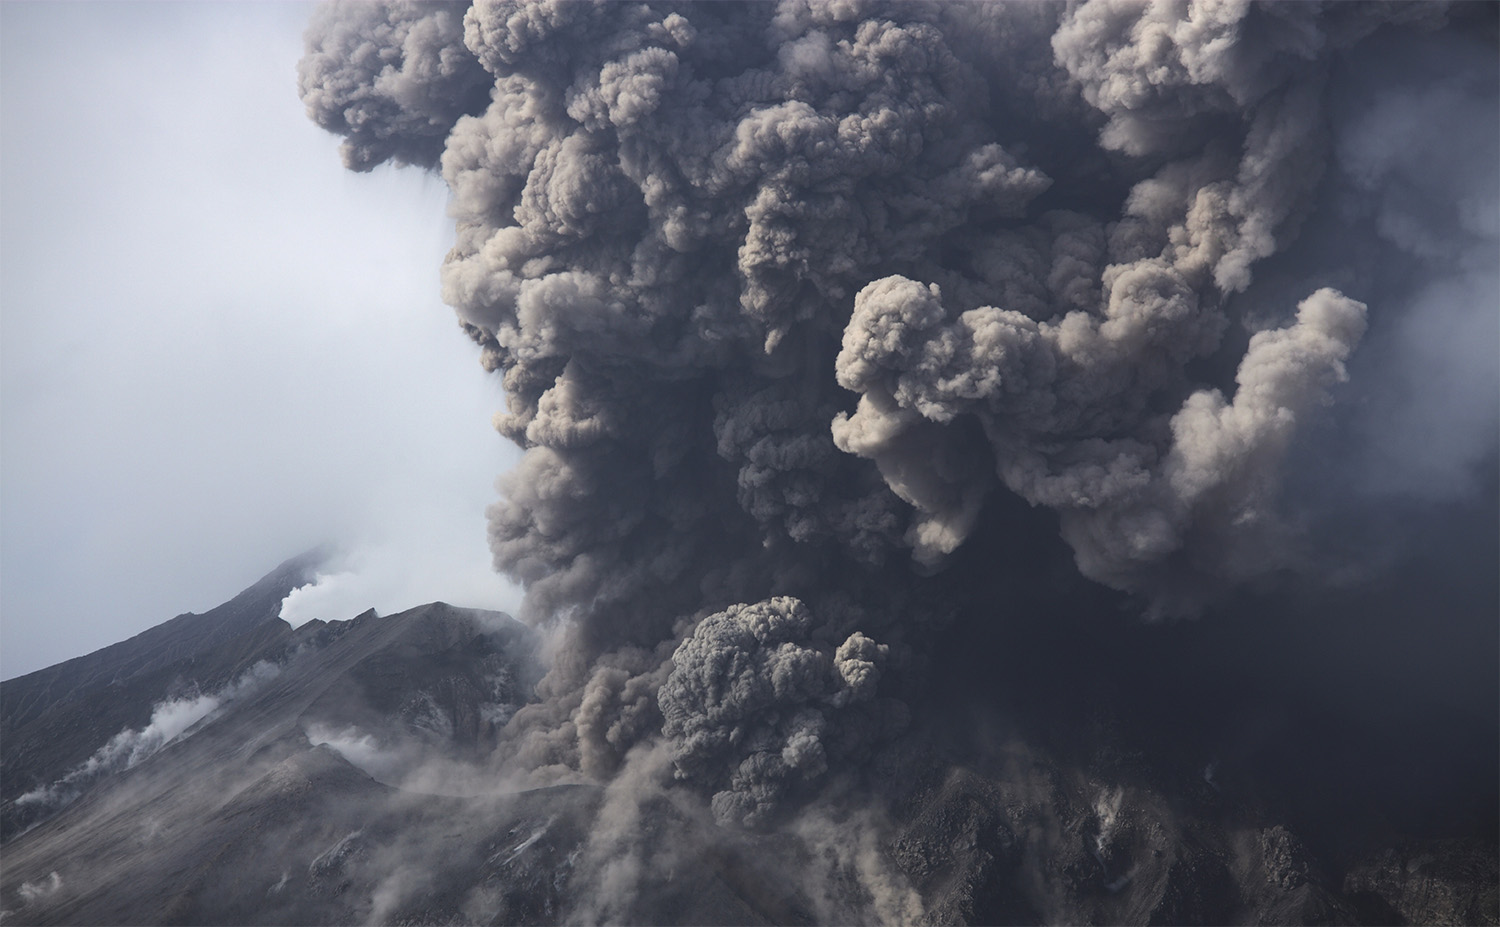 Volcanic ash pollution